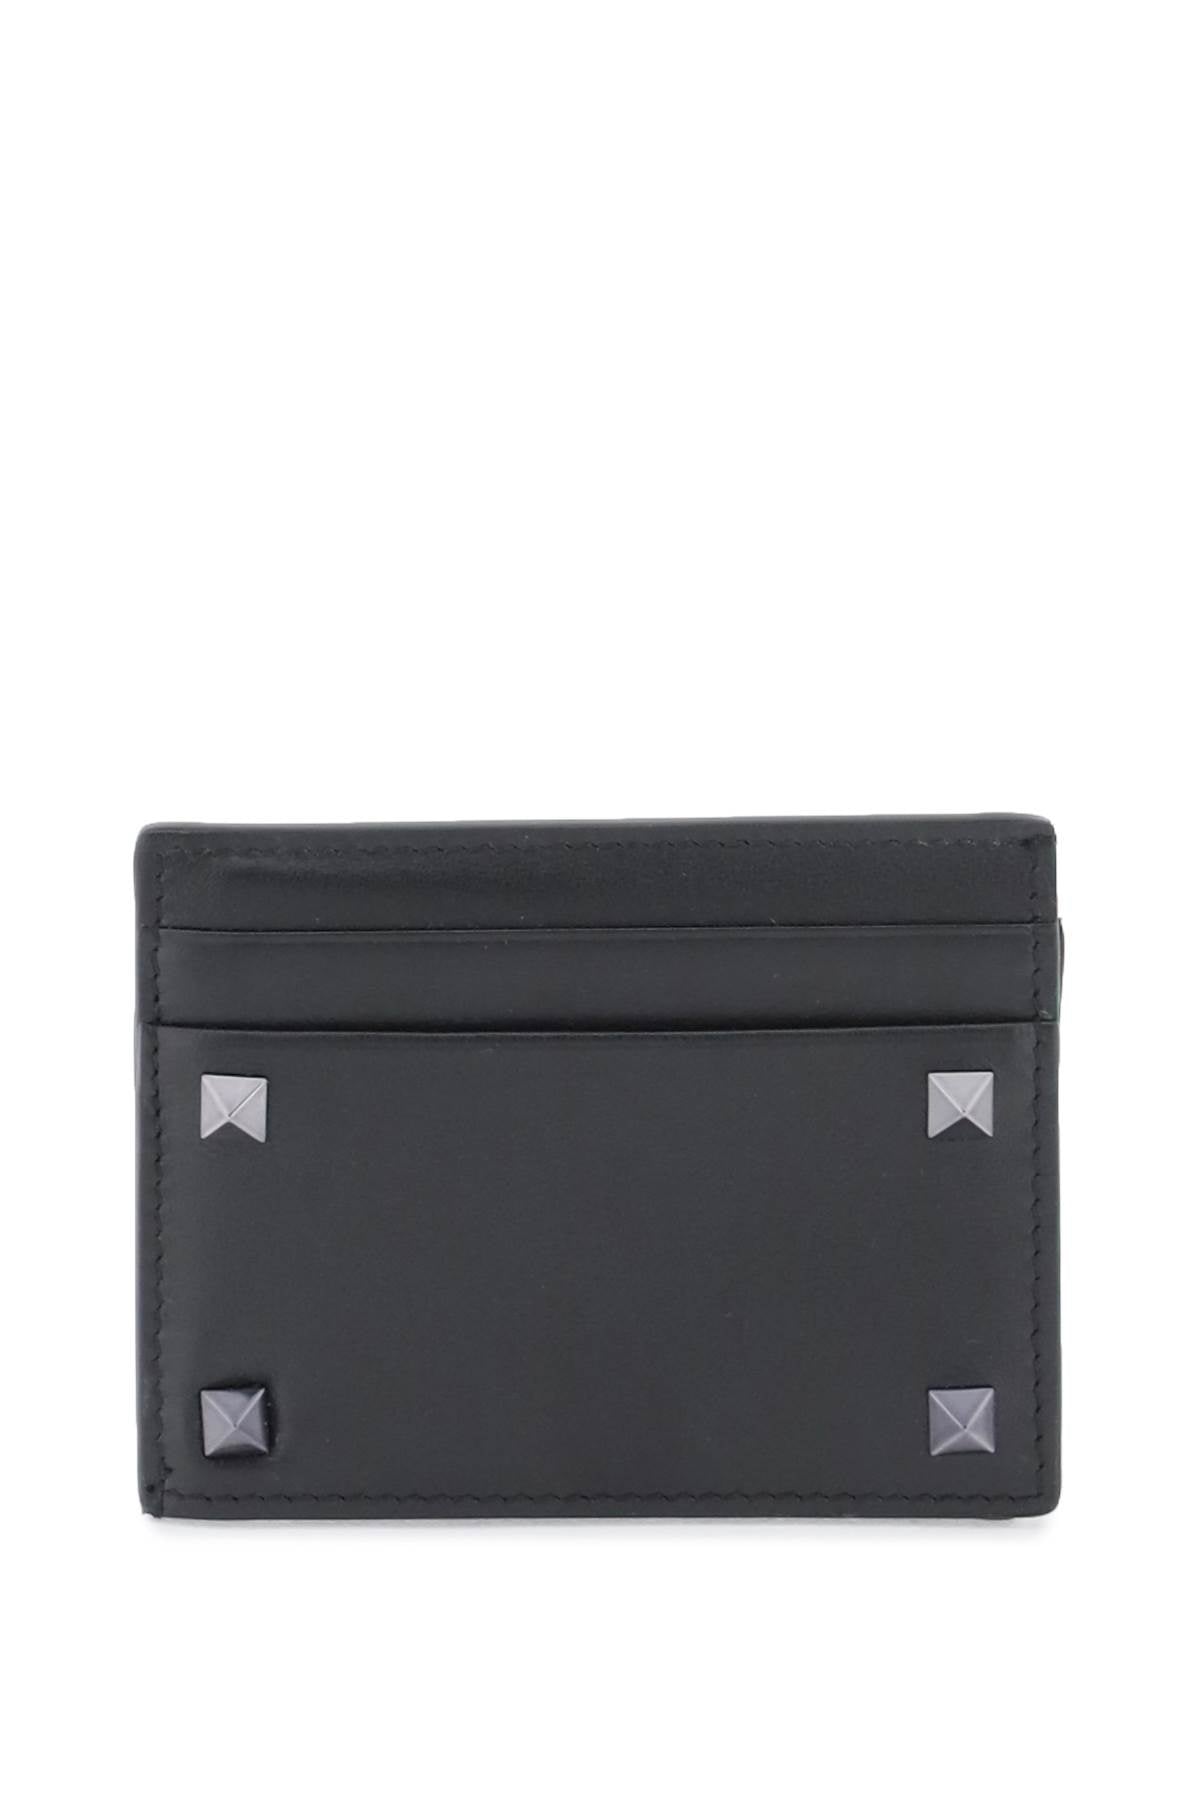 Valentino garavani rockstud leather card holder 4Y2P0523VH3 NERO